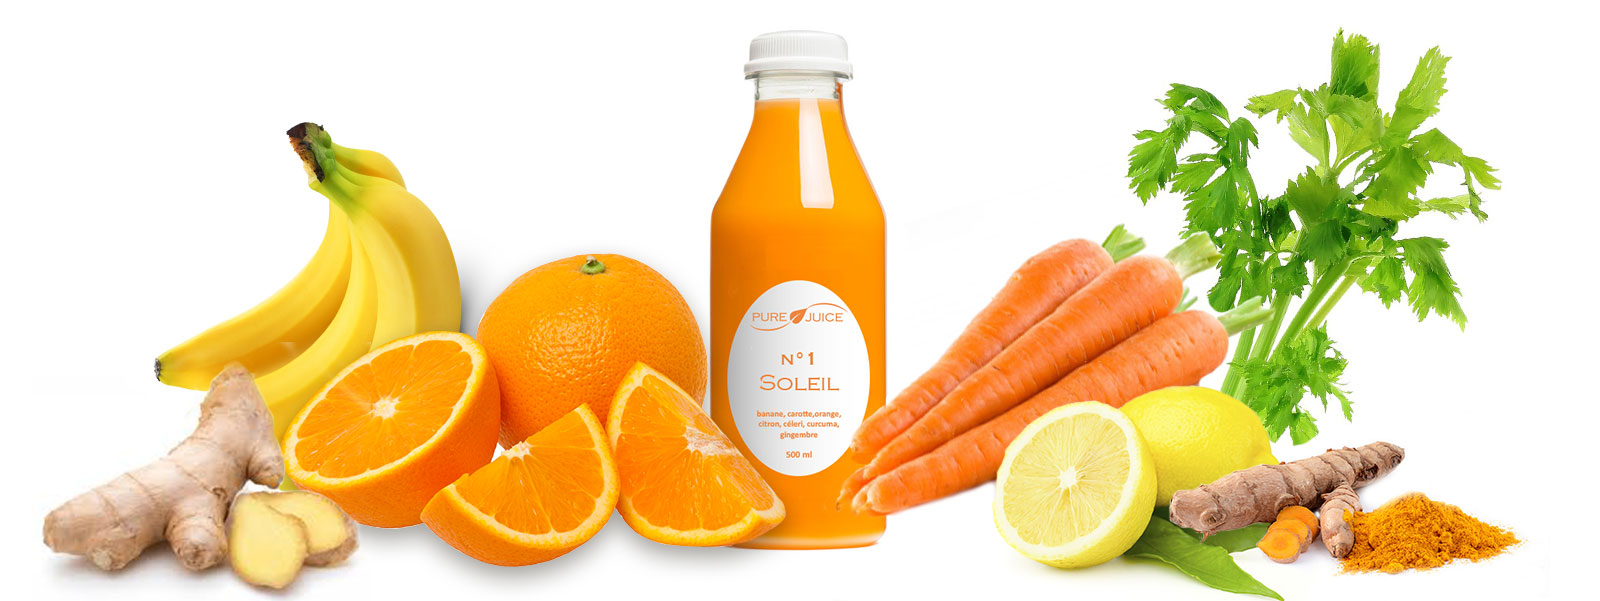 jus detox pure juice fruit legumes orange